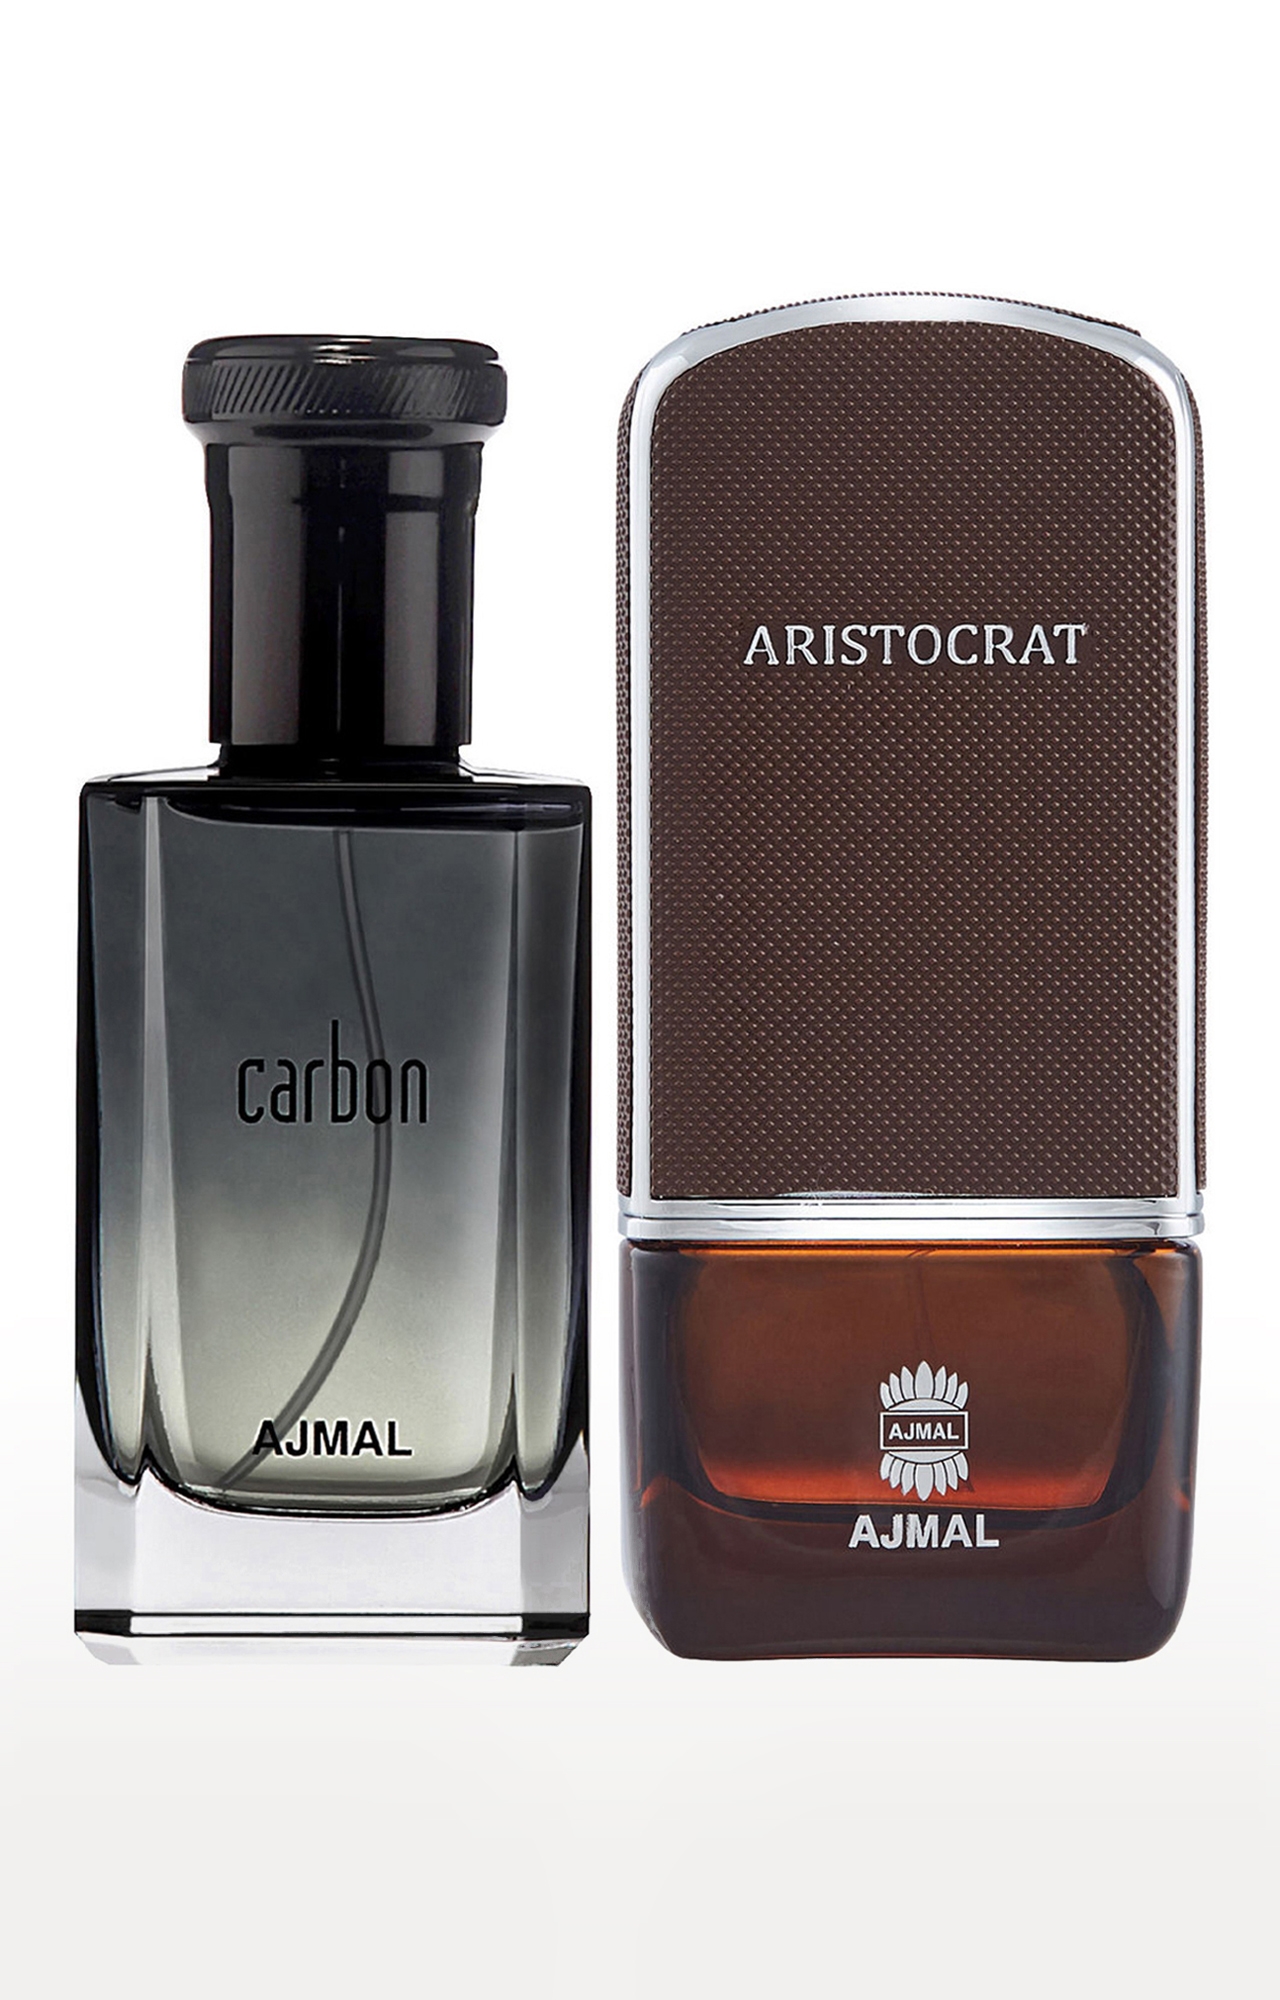 Ajmal Carbon EDP Perfume 100ml for Men and Aristocrat EDP Perfume 75ml for Men